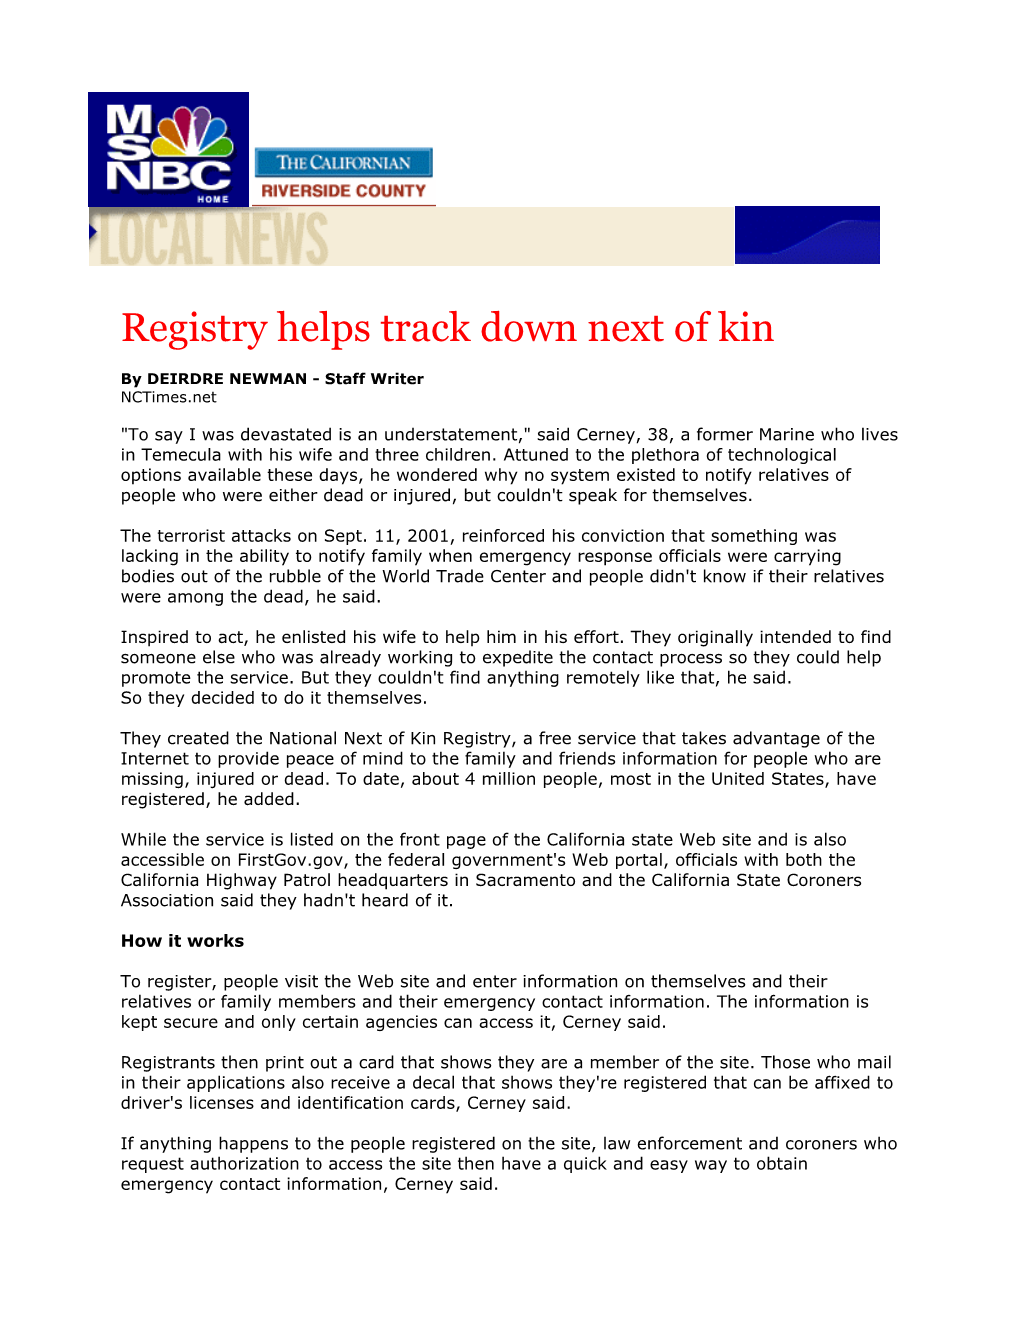 Registry Helps Track Down Next of Kin